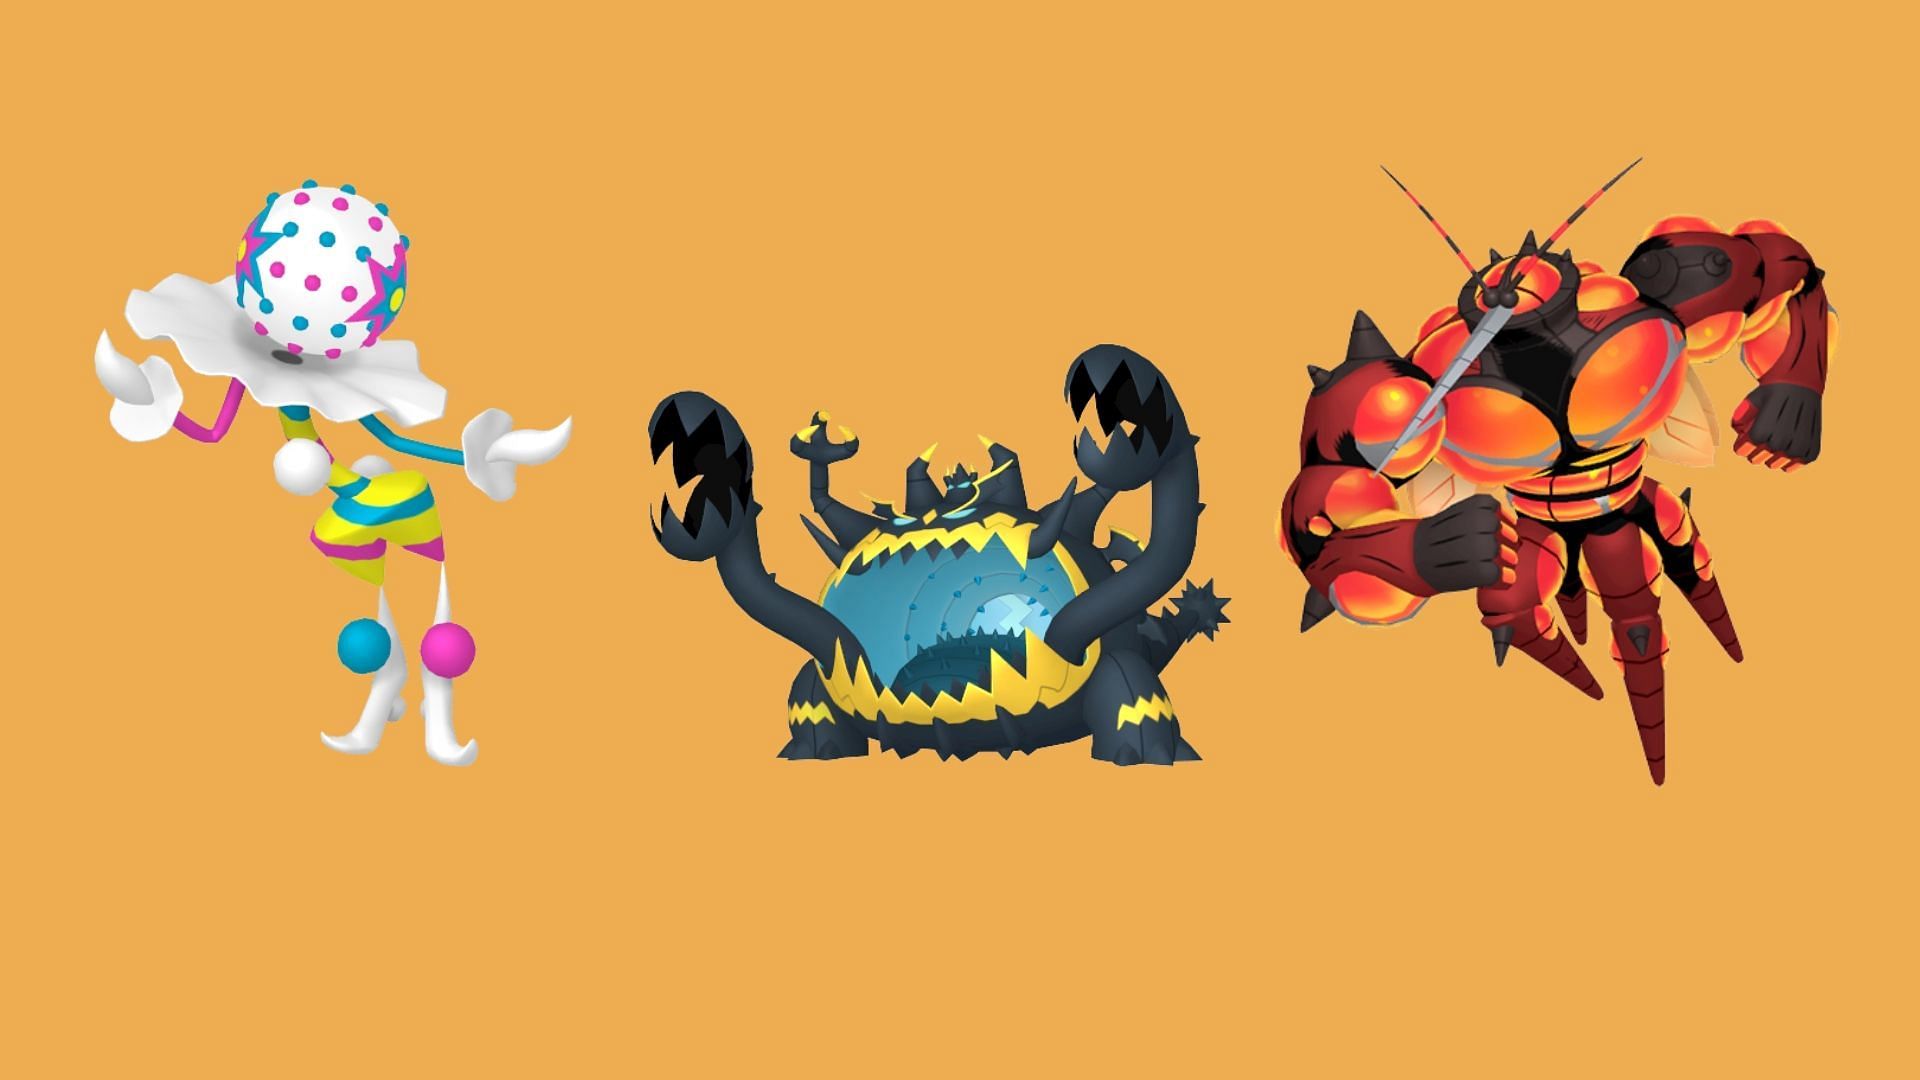 Blacephalon, Guzzlord, and Buzzwole (Image via The Pokemon Company)